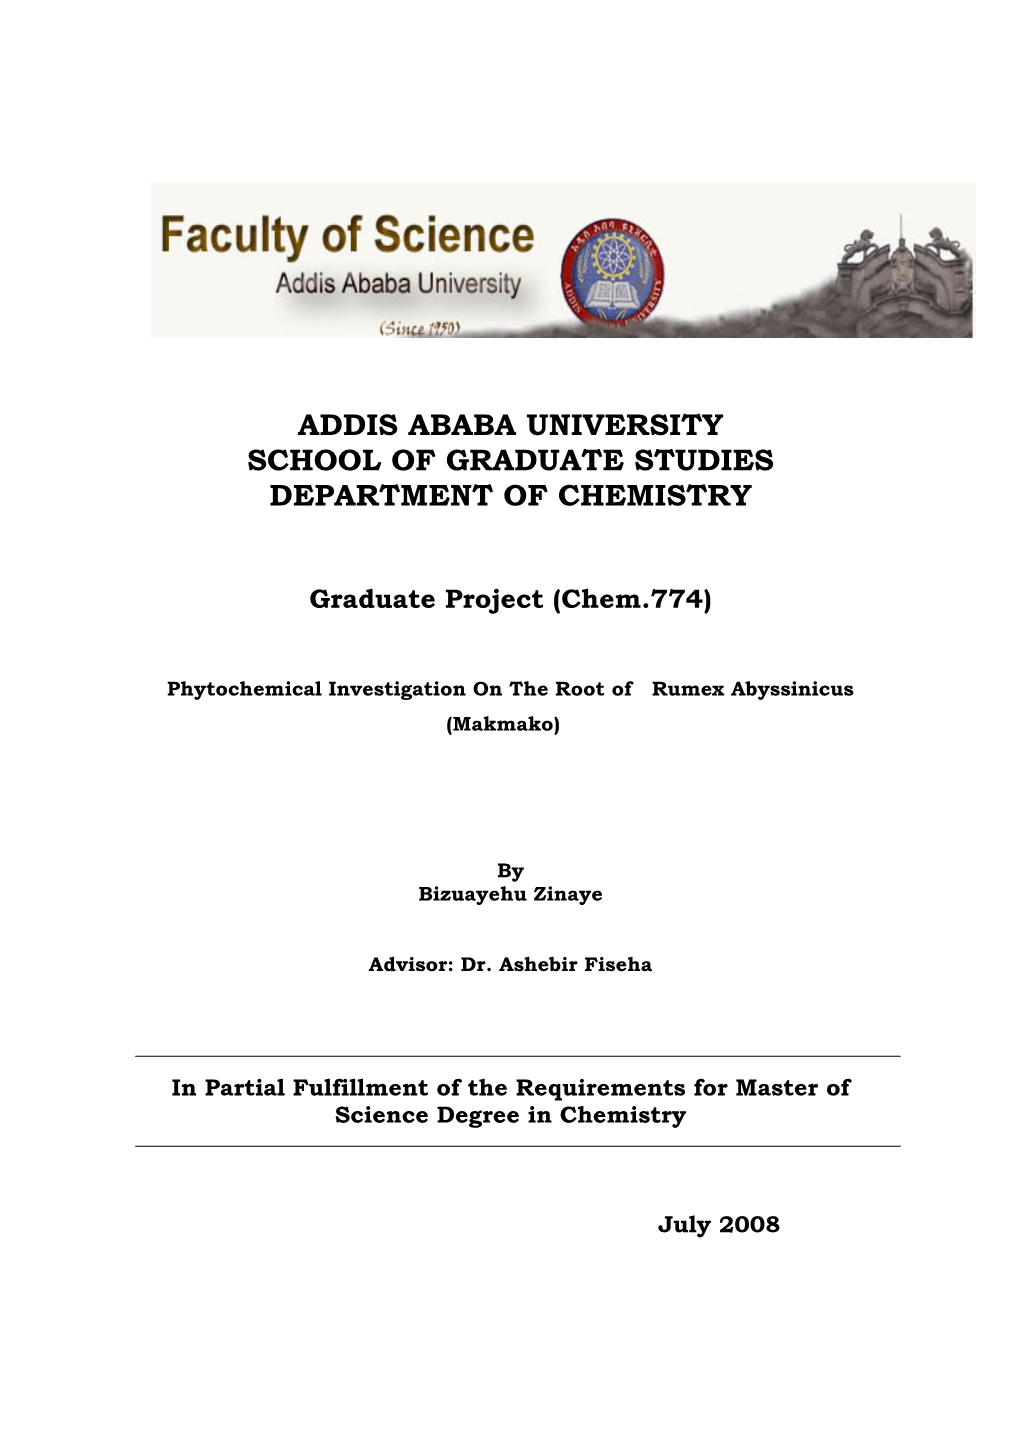 Addis Ababa University School of Graduate Studies Department of Chemistry